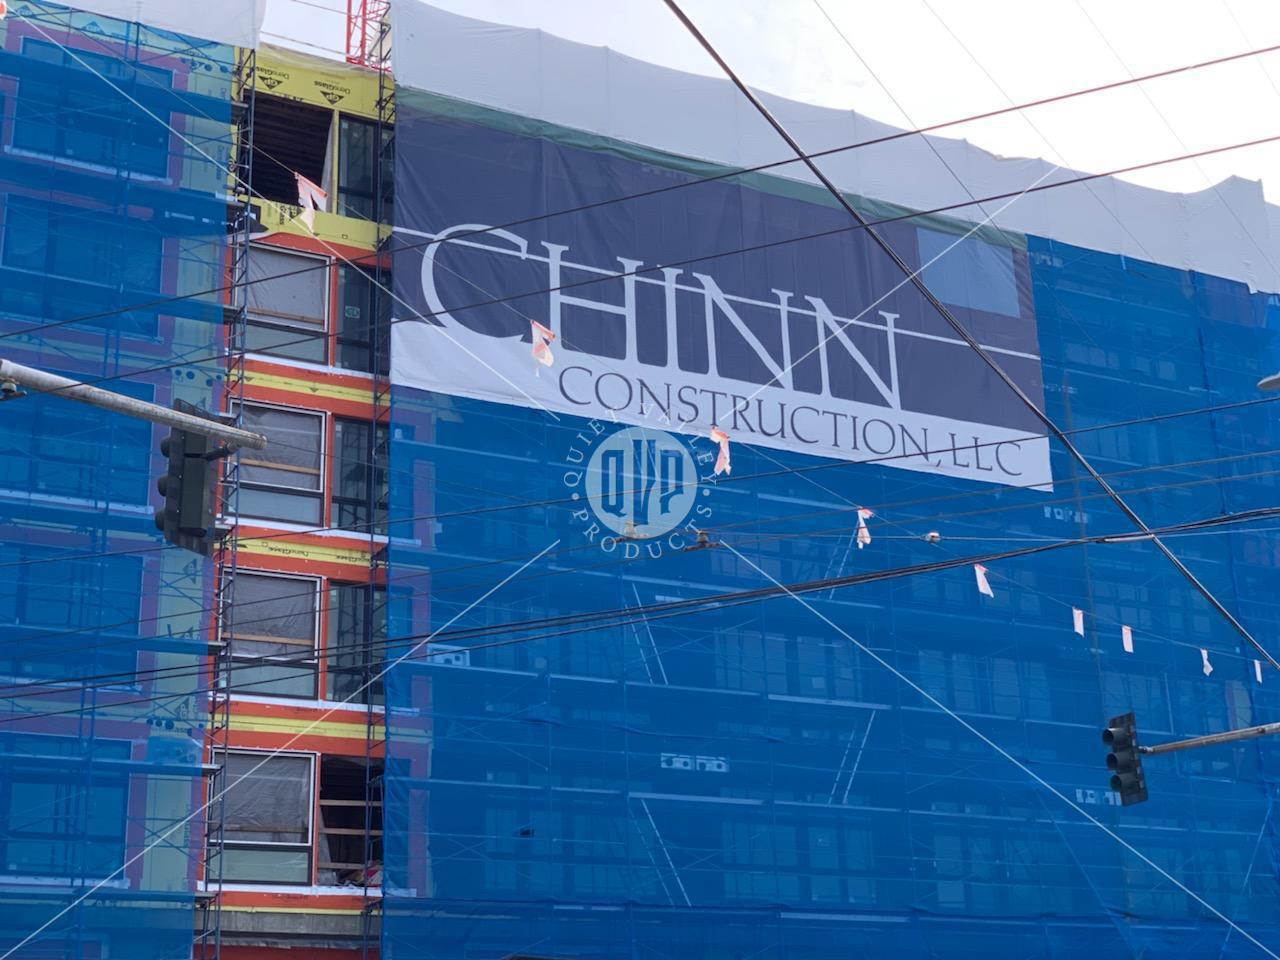 Chinn Construction Vinyl